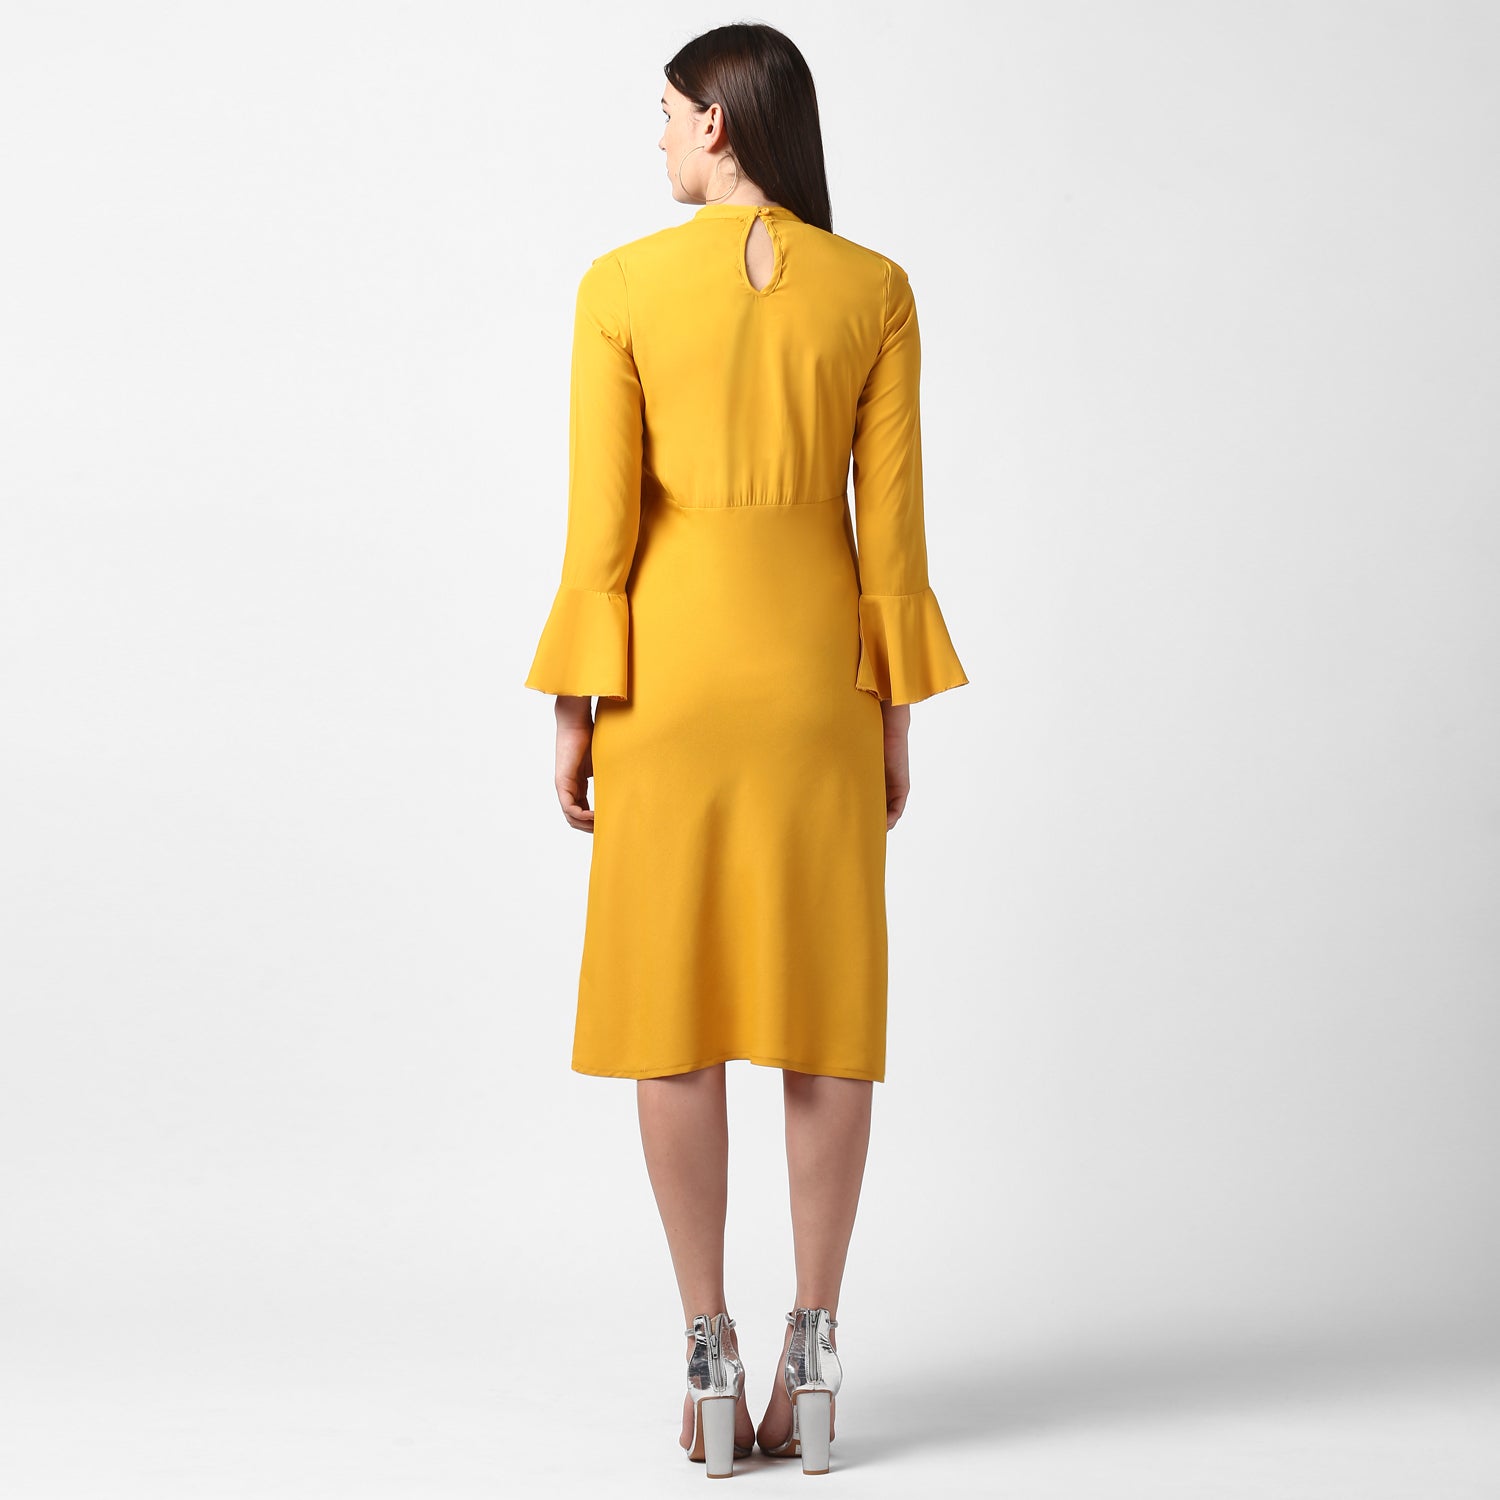 Women's Yellow Front Ruffle Bell Sleeve Dress - StyleStone